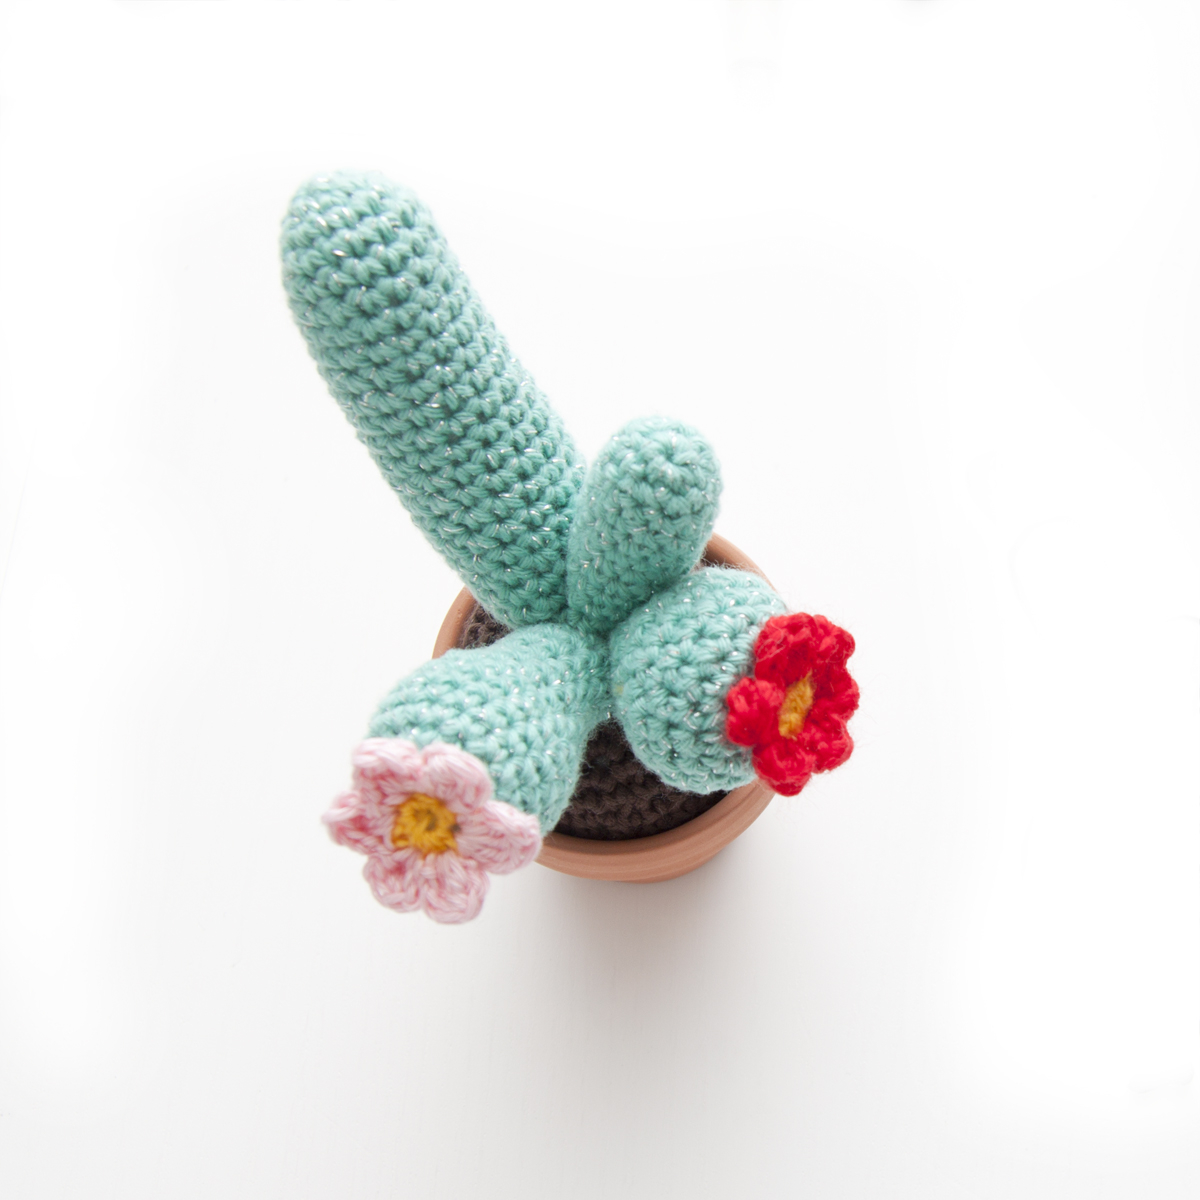 Crochet Cactus Pattern Cactus No4 Free Crochet Cactus Pattern Inart Amigurumi Crochet